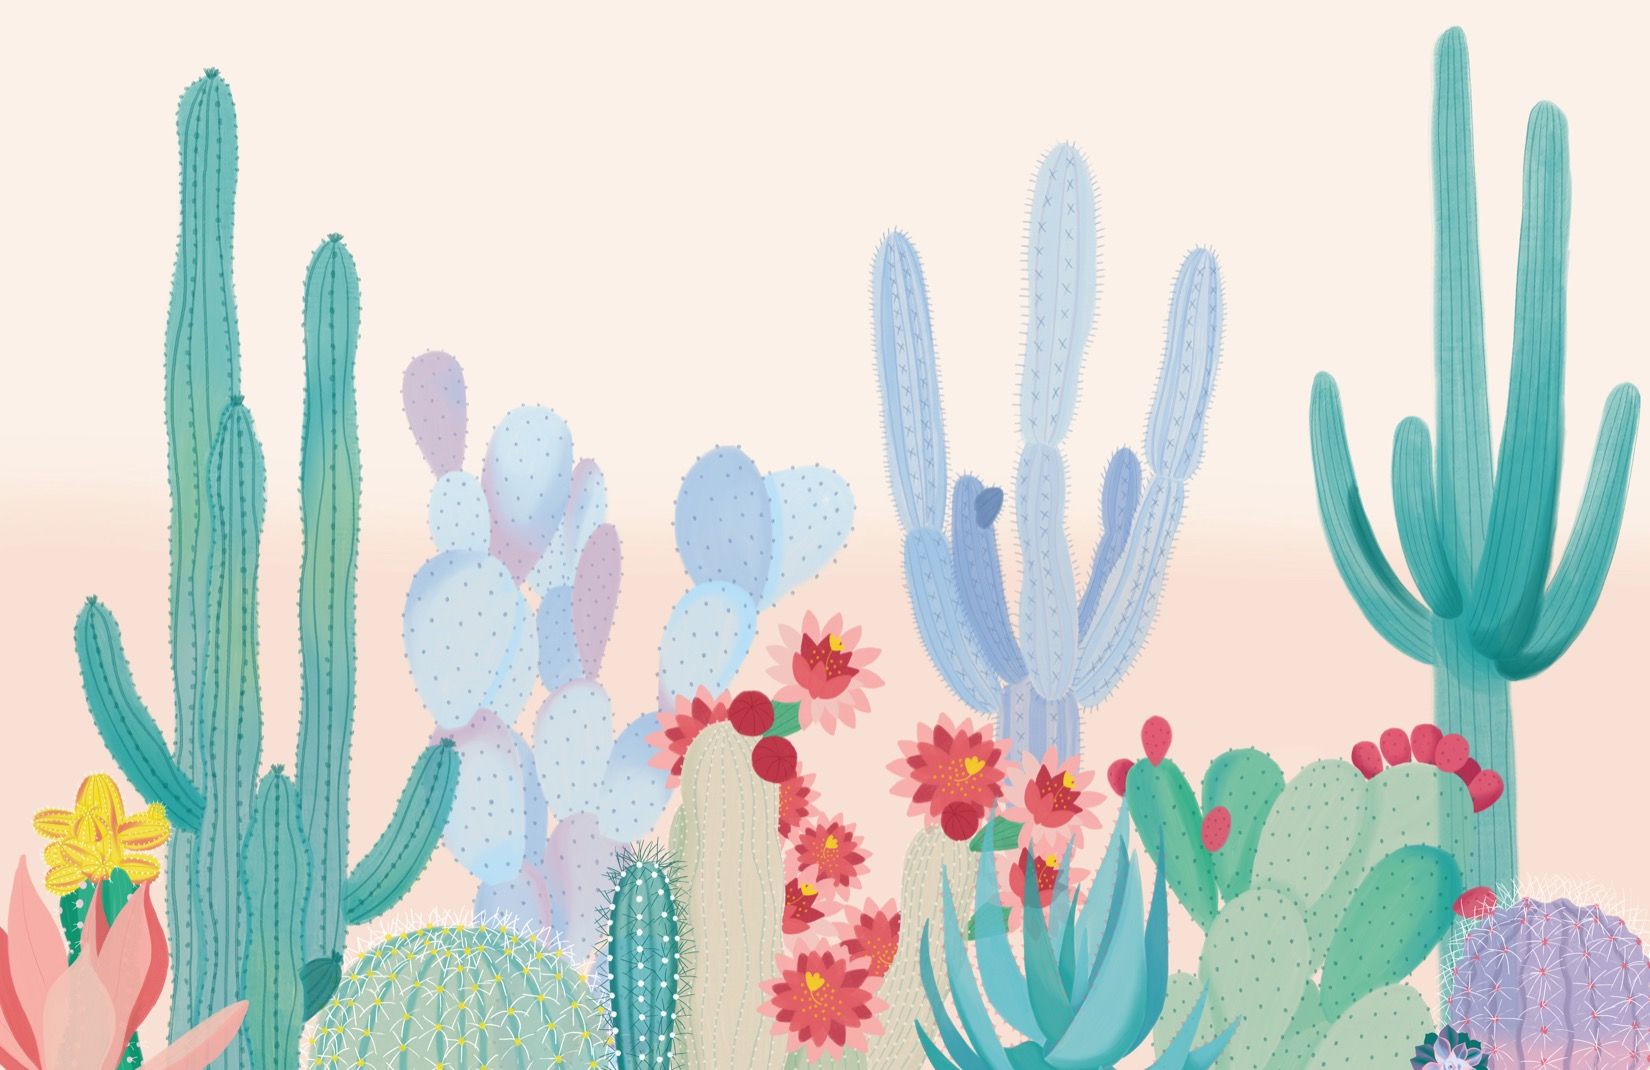  Kakteen Hintergrundbild 1650x1070. Cute Cactus Wallpaper Online.k12.tr 1689618178